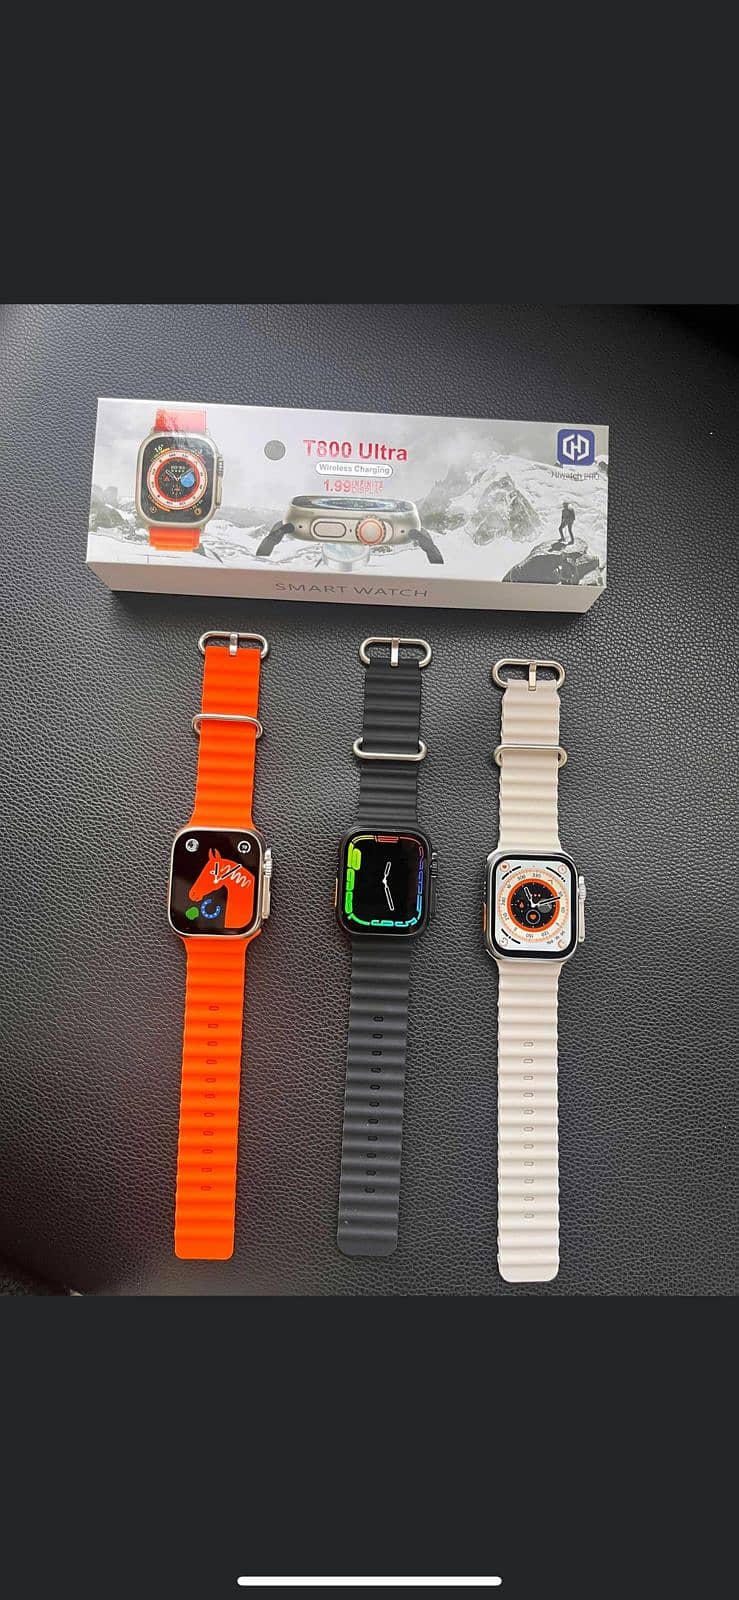 New) T900 Ultra Smart Watch - 2.09 Infinite Display 1